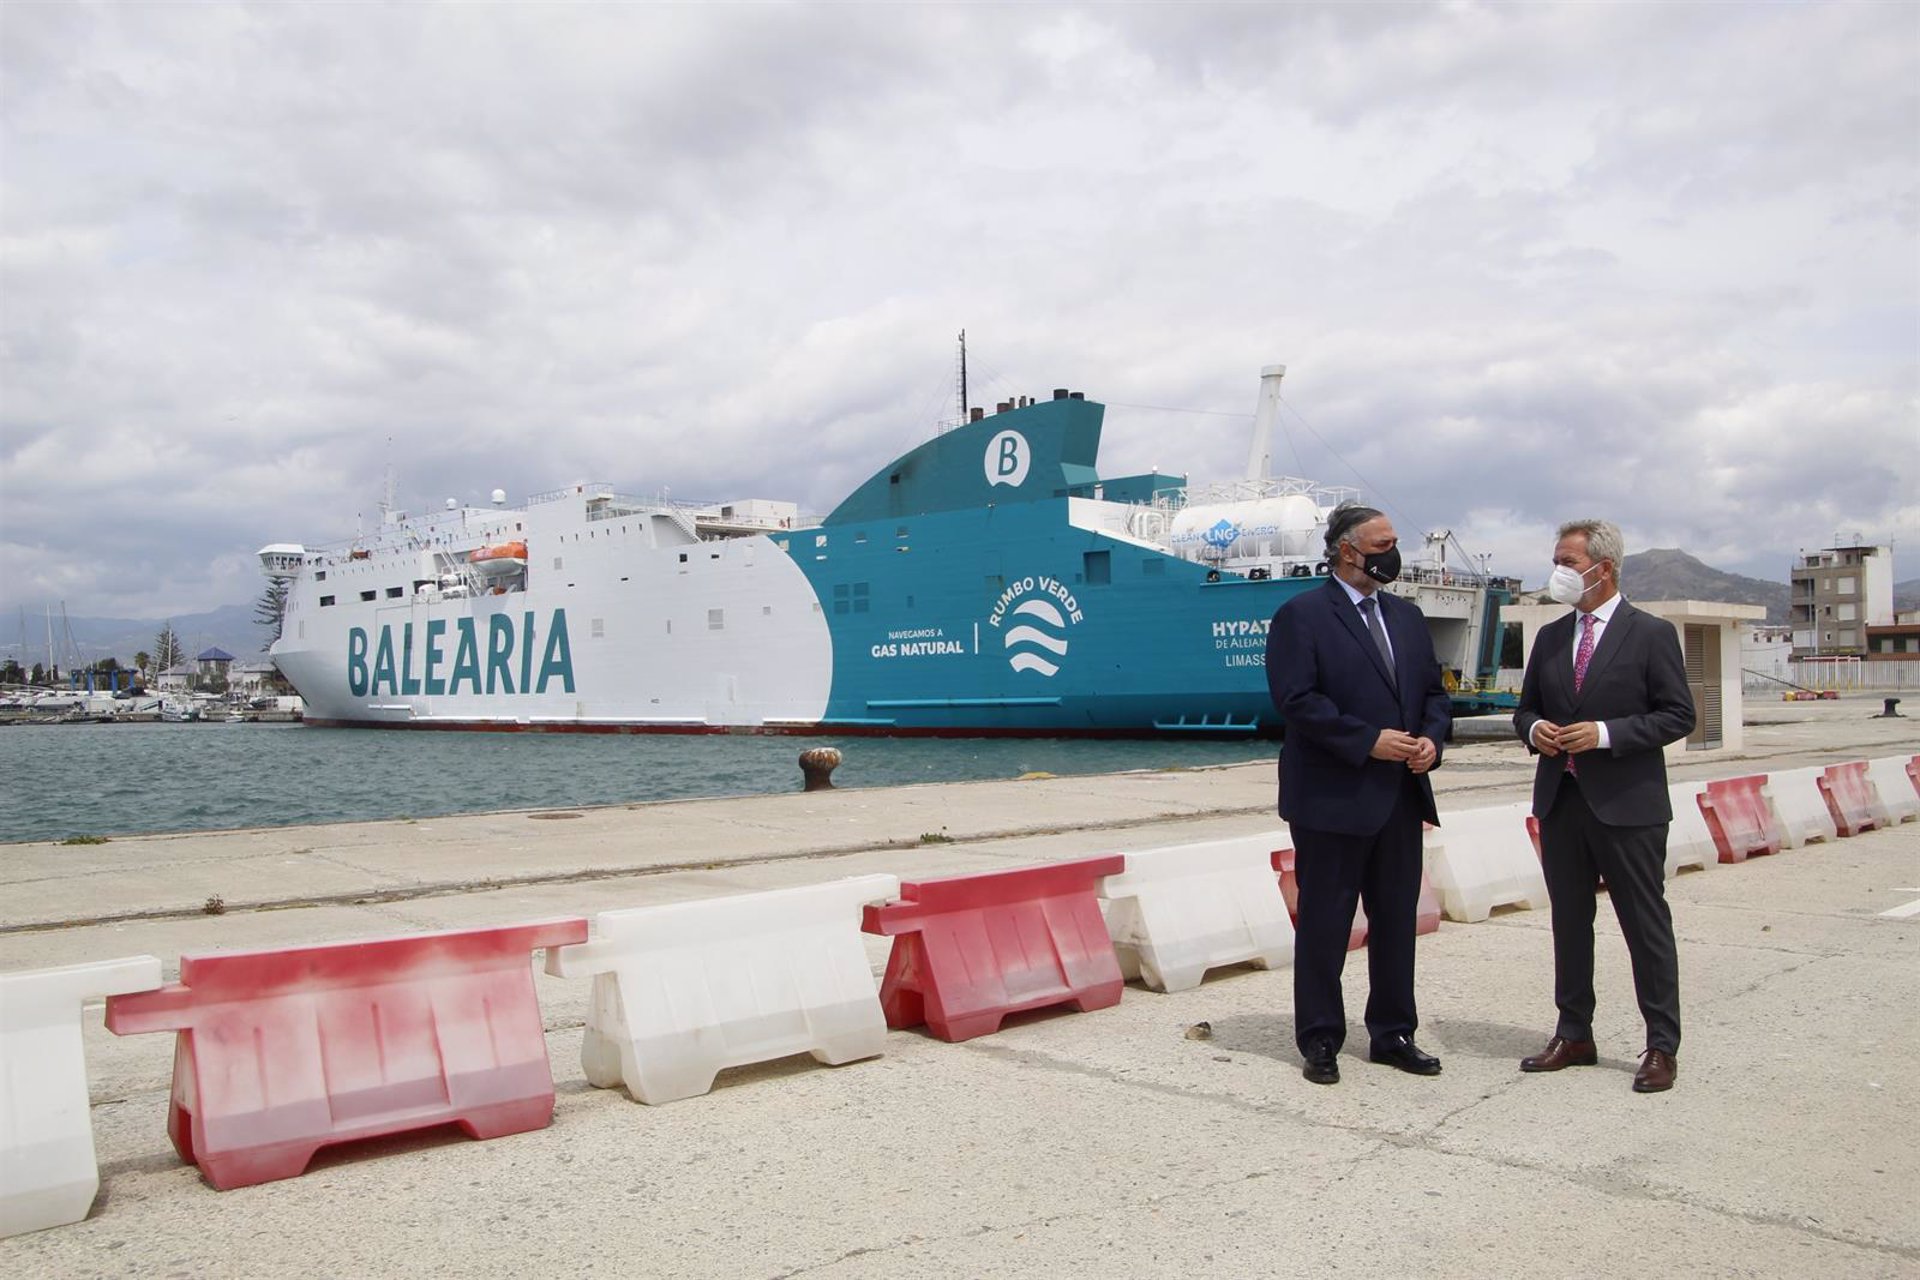 Motril suministra 2.700 toneladas de gas natural licuado desde la llegada de Balearia